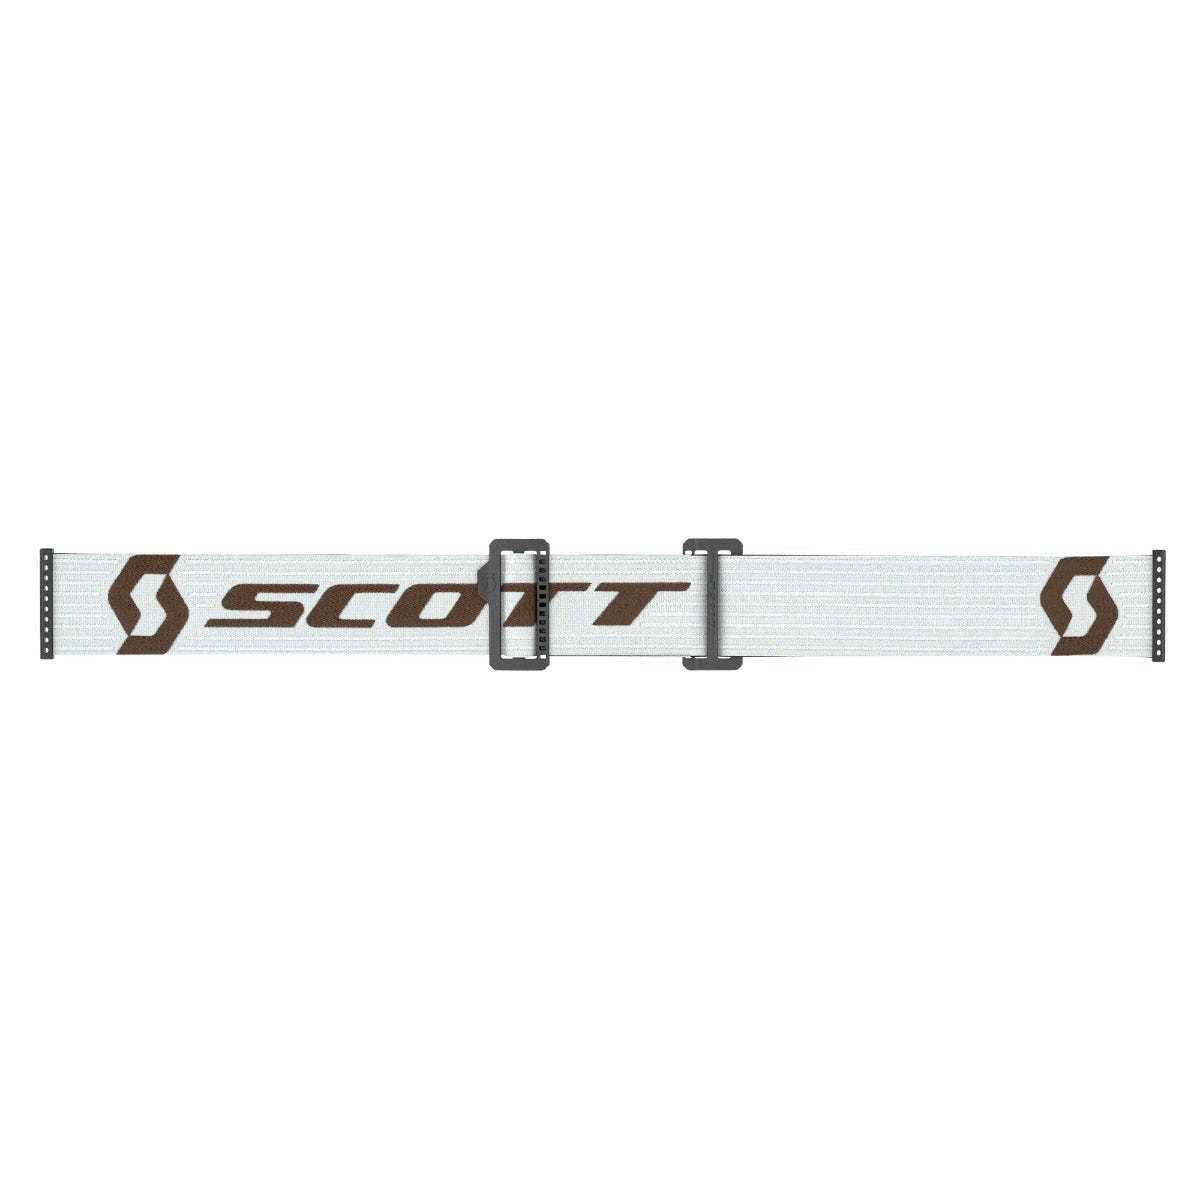 Scott Prospect Amplifier Goggle Grey/Brown/Gold Chrome Lens